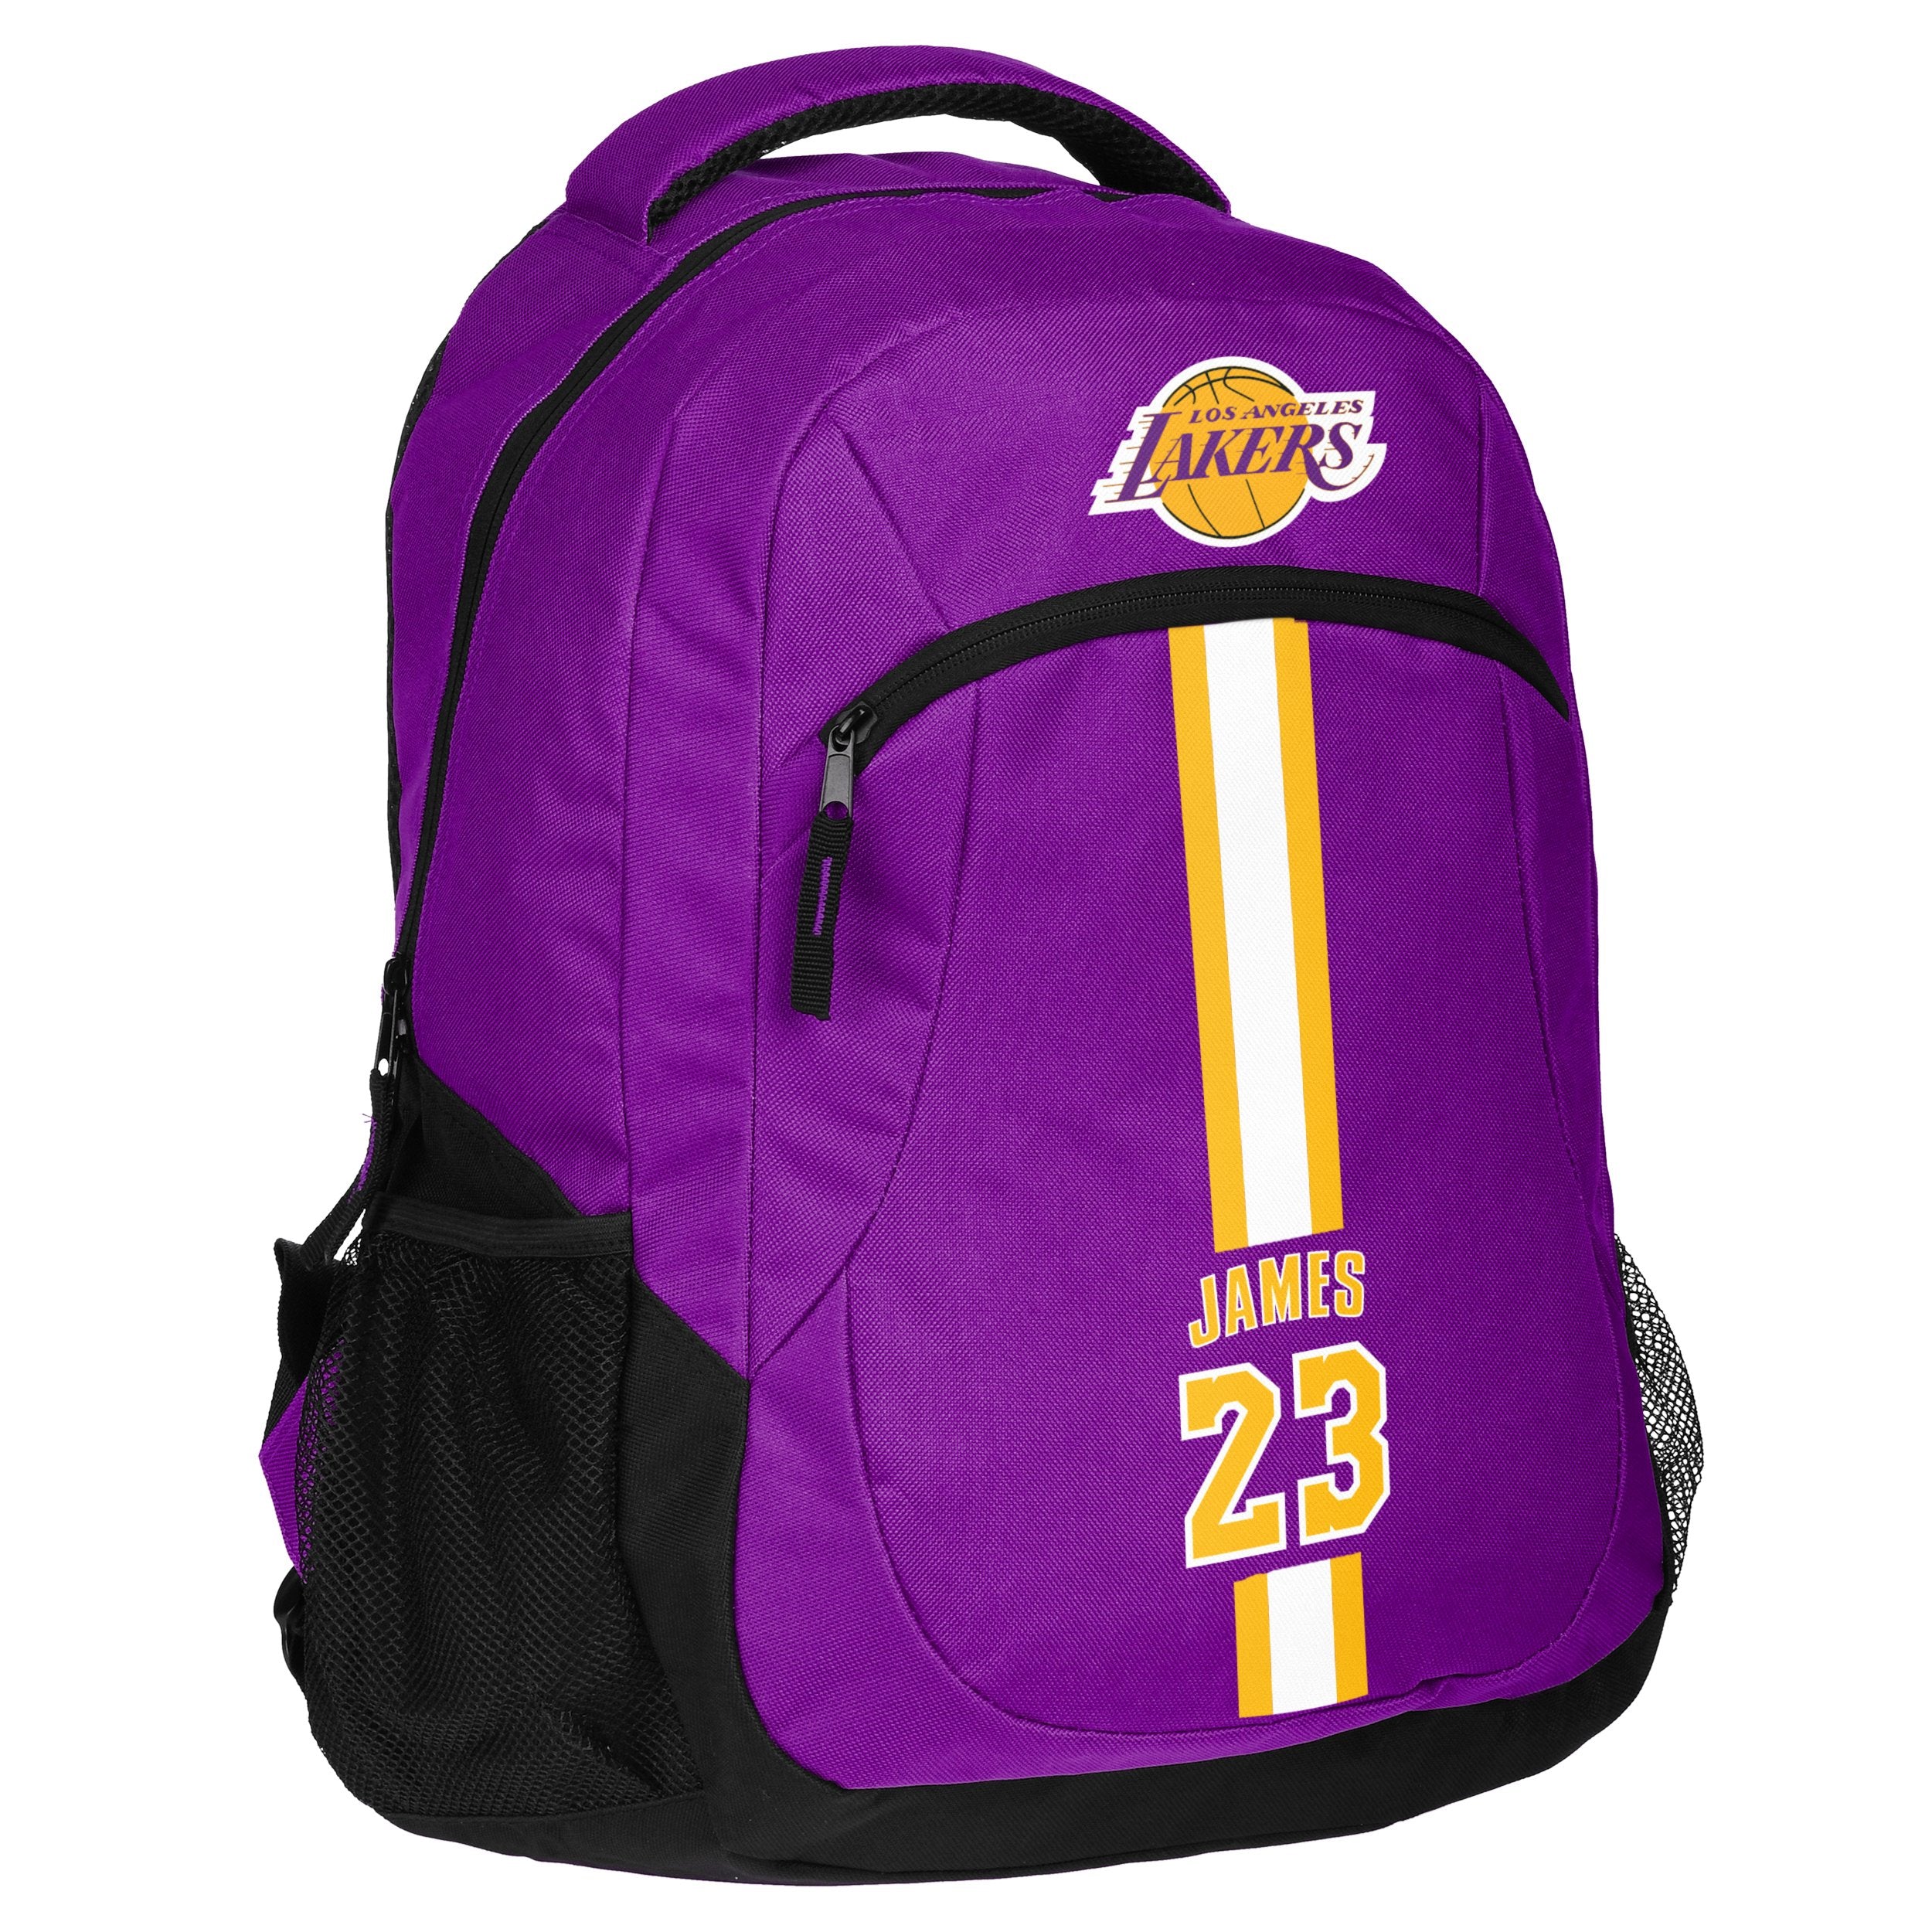 Personalized Backpack Lebron James Style Backpack Custom 